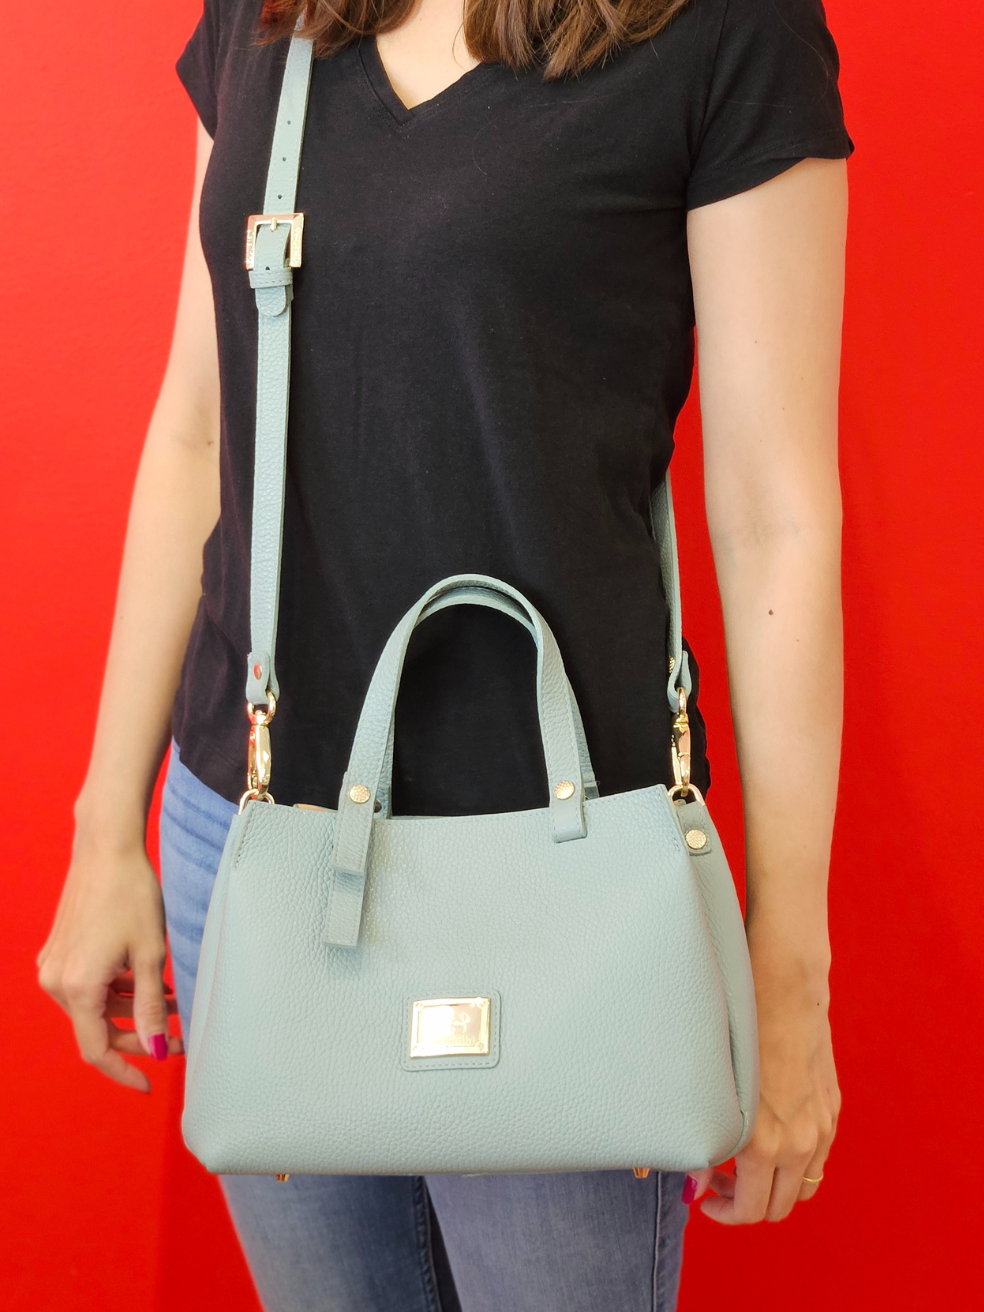 Cavalinho Muse Leather Handbag - SKU 18300490.09.99. | #color_DarkSeaGreen